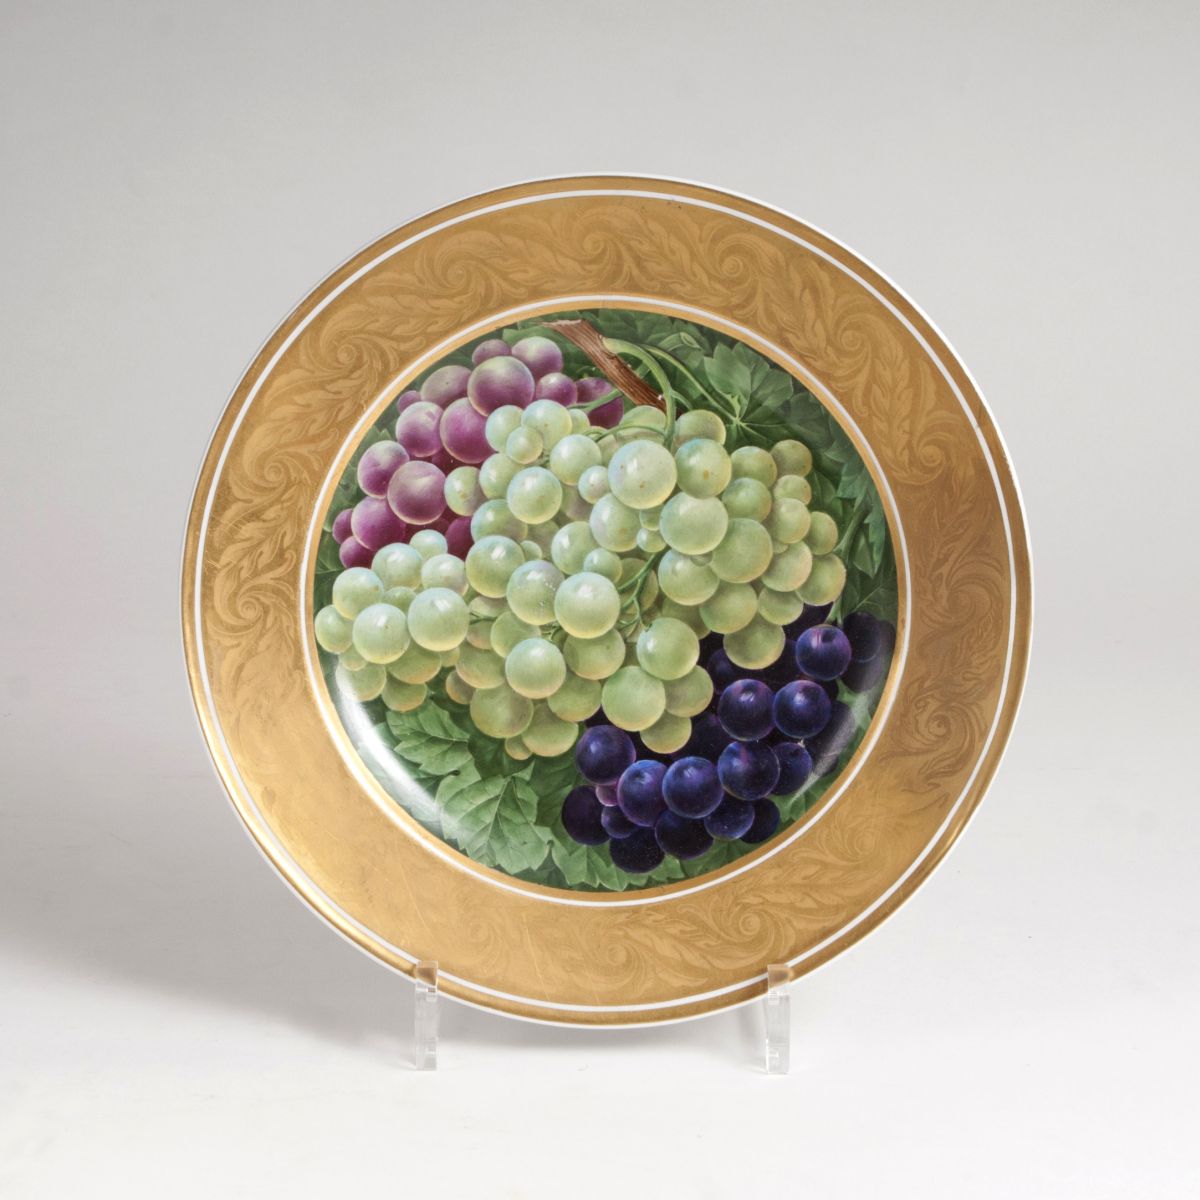 A plate with opulent grape decor